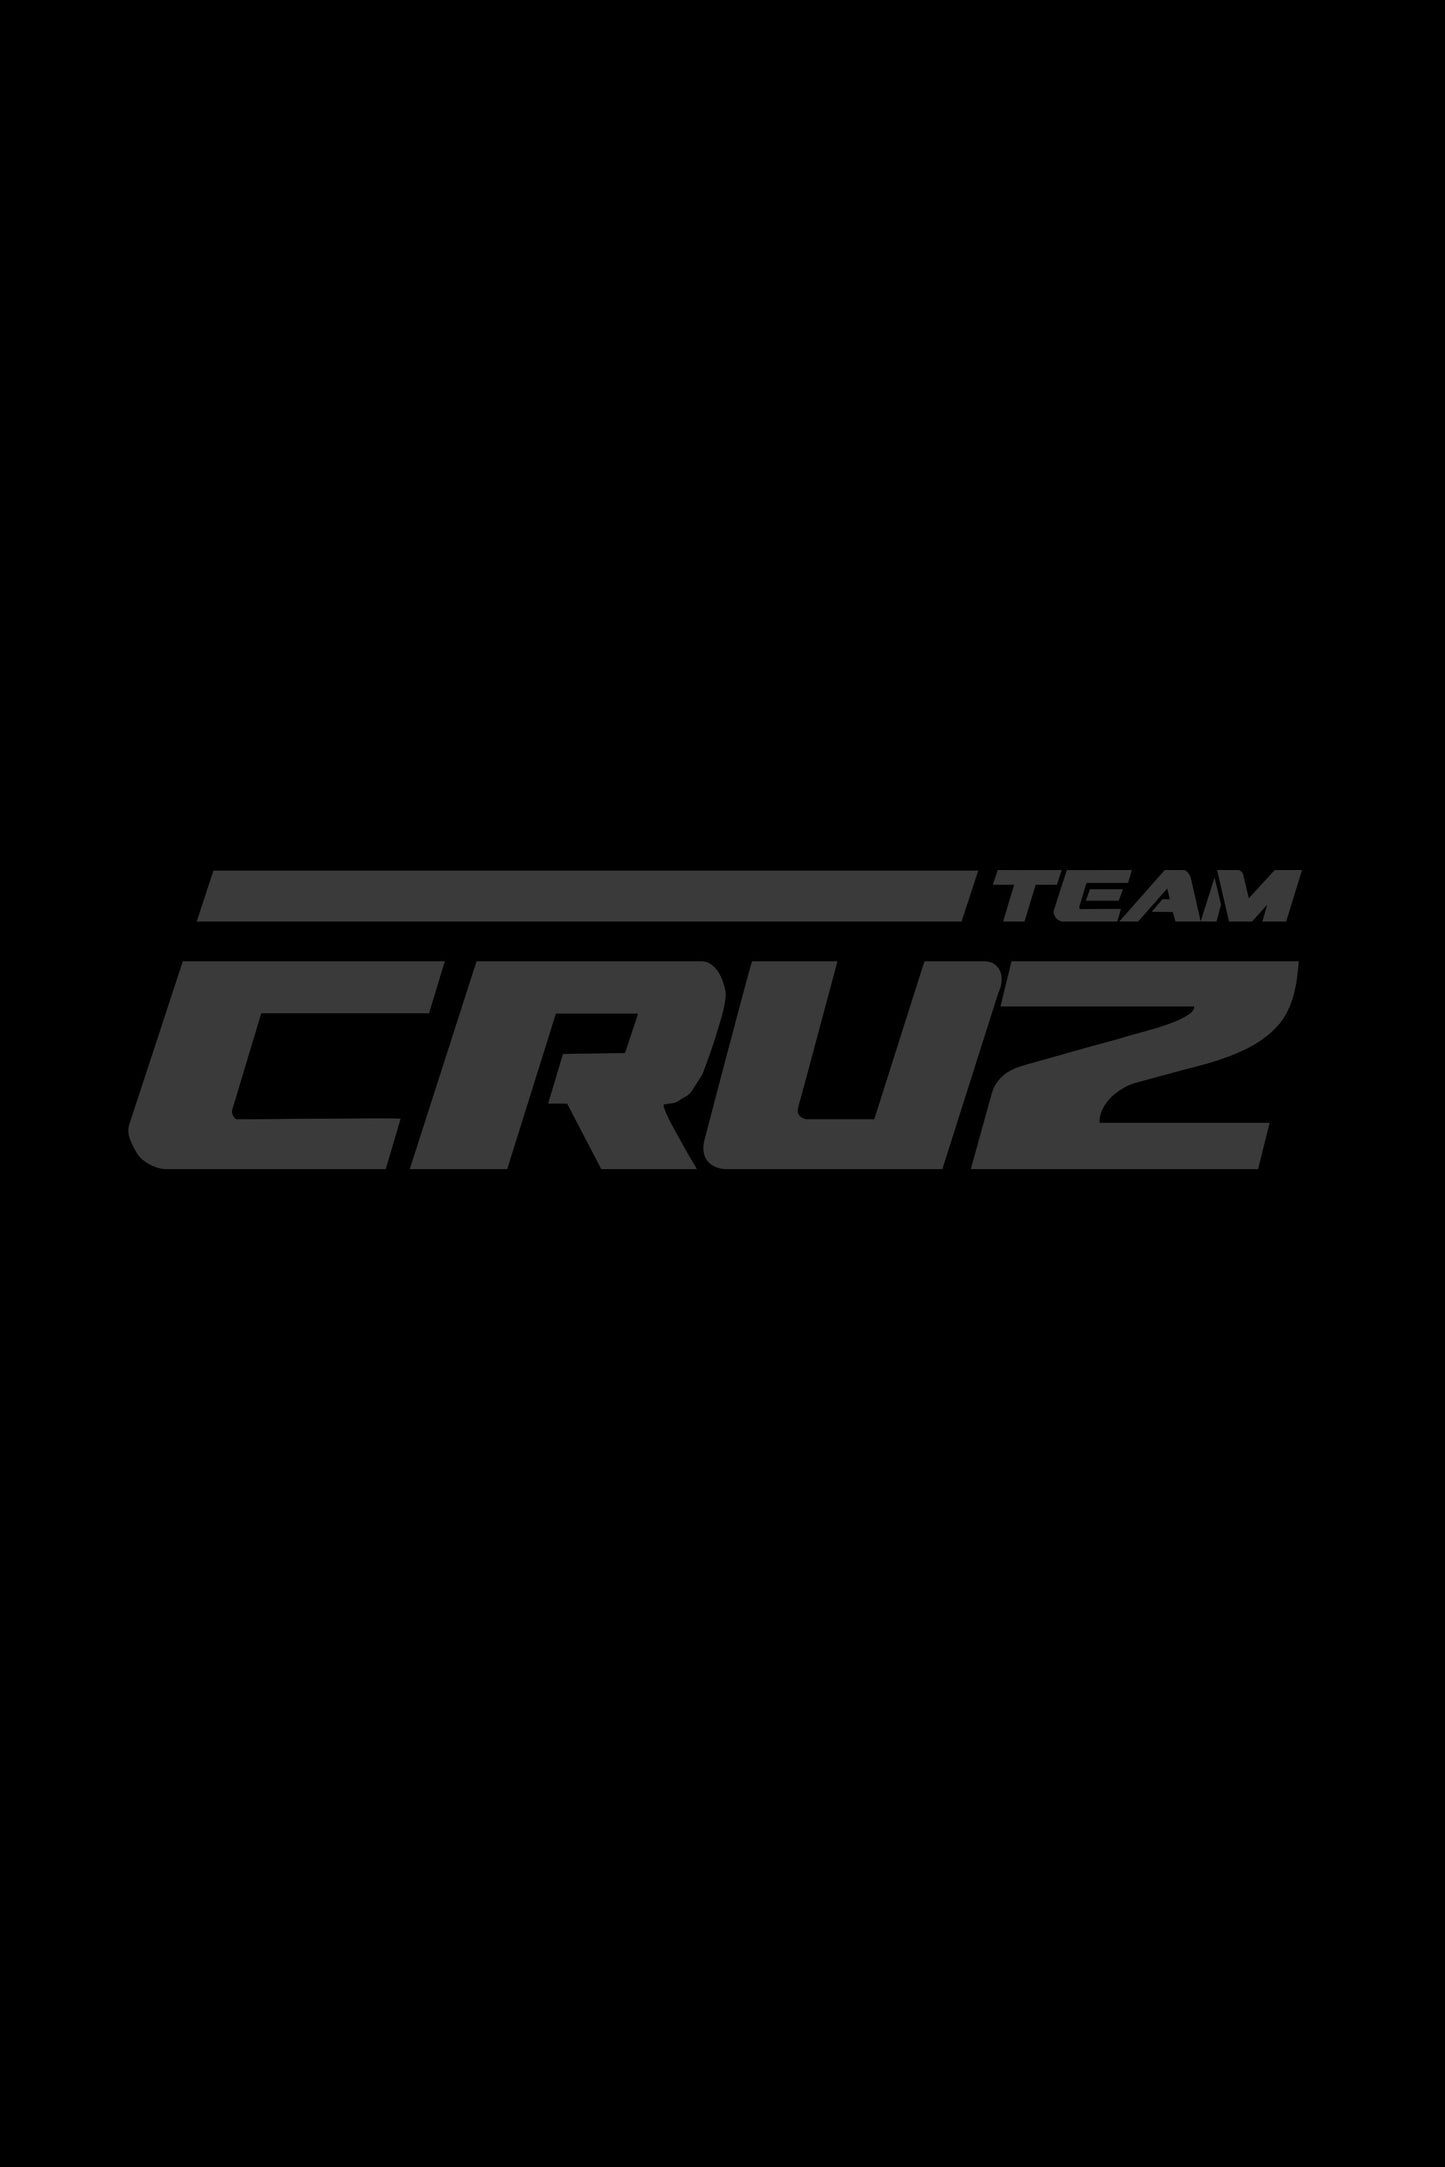 Dominick Cruz “TeamCruzFamily” Mask